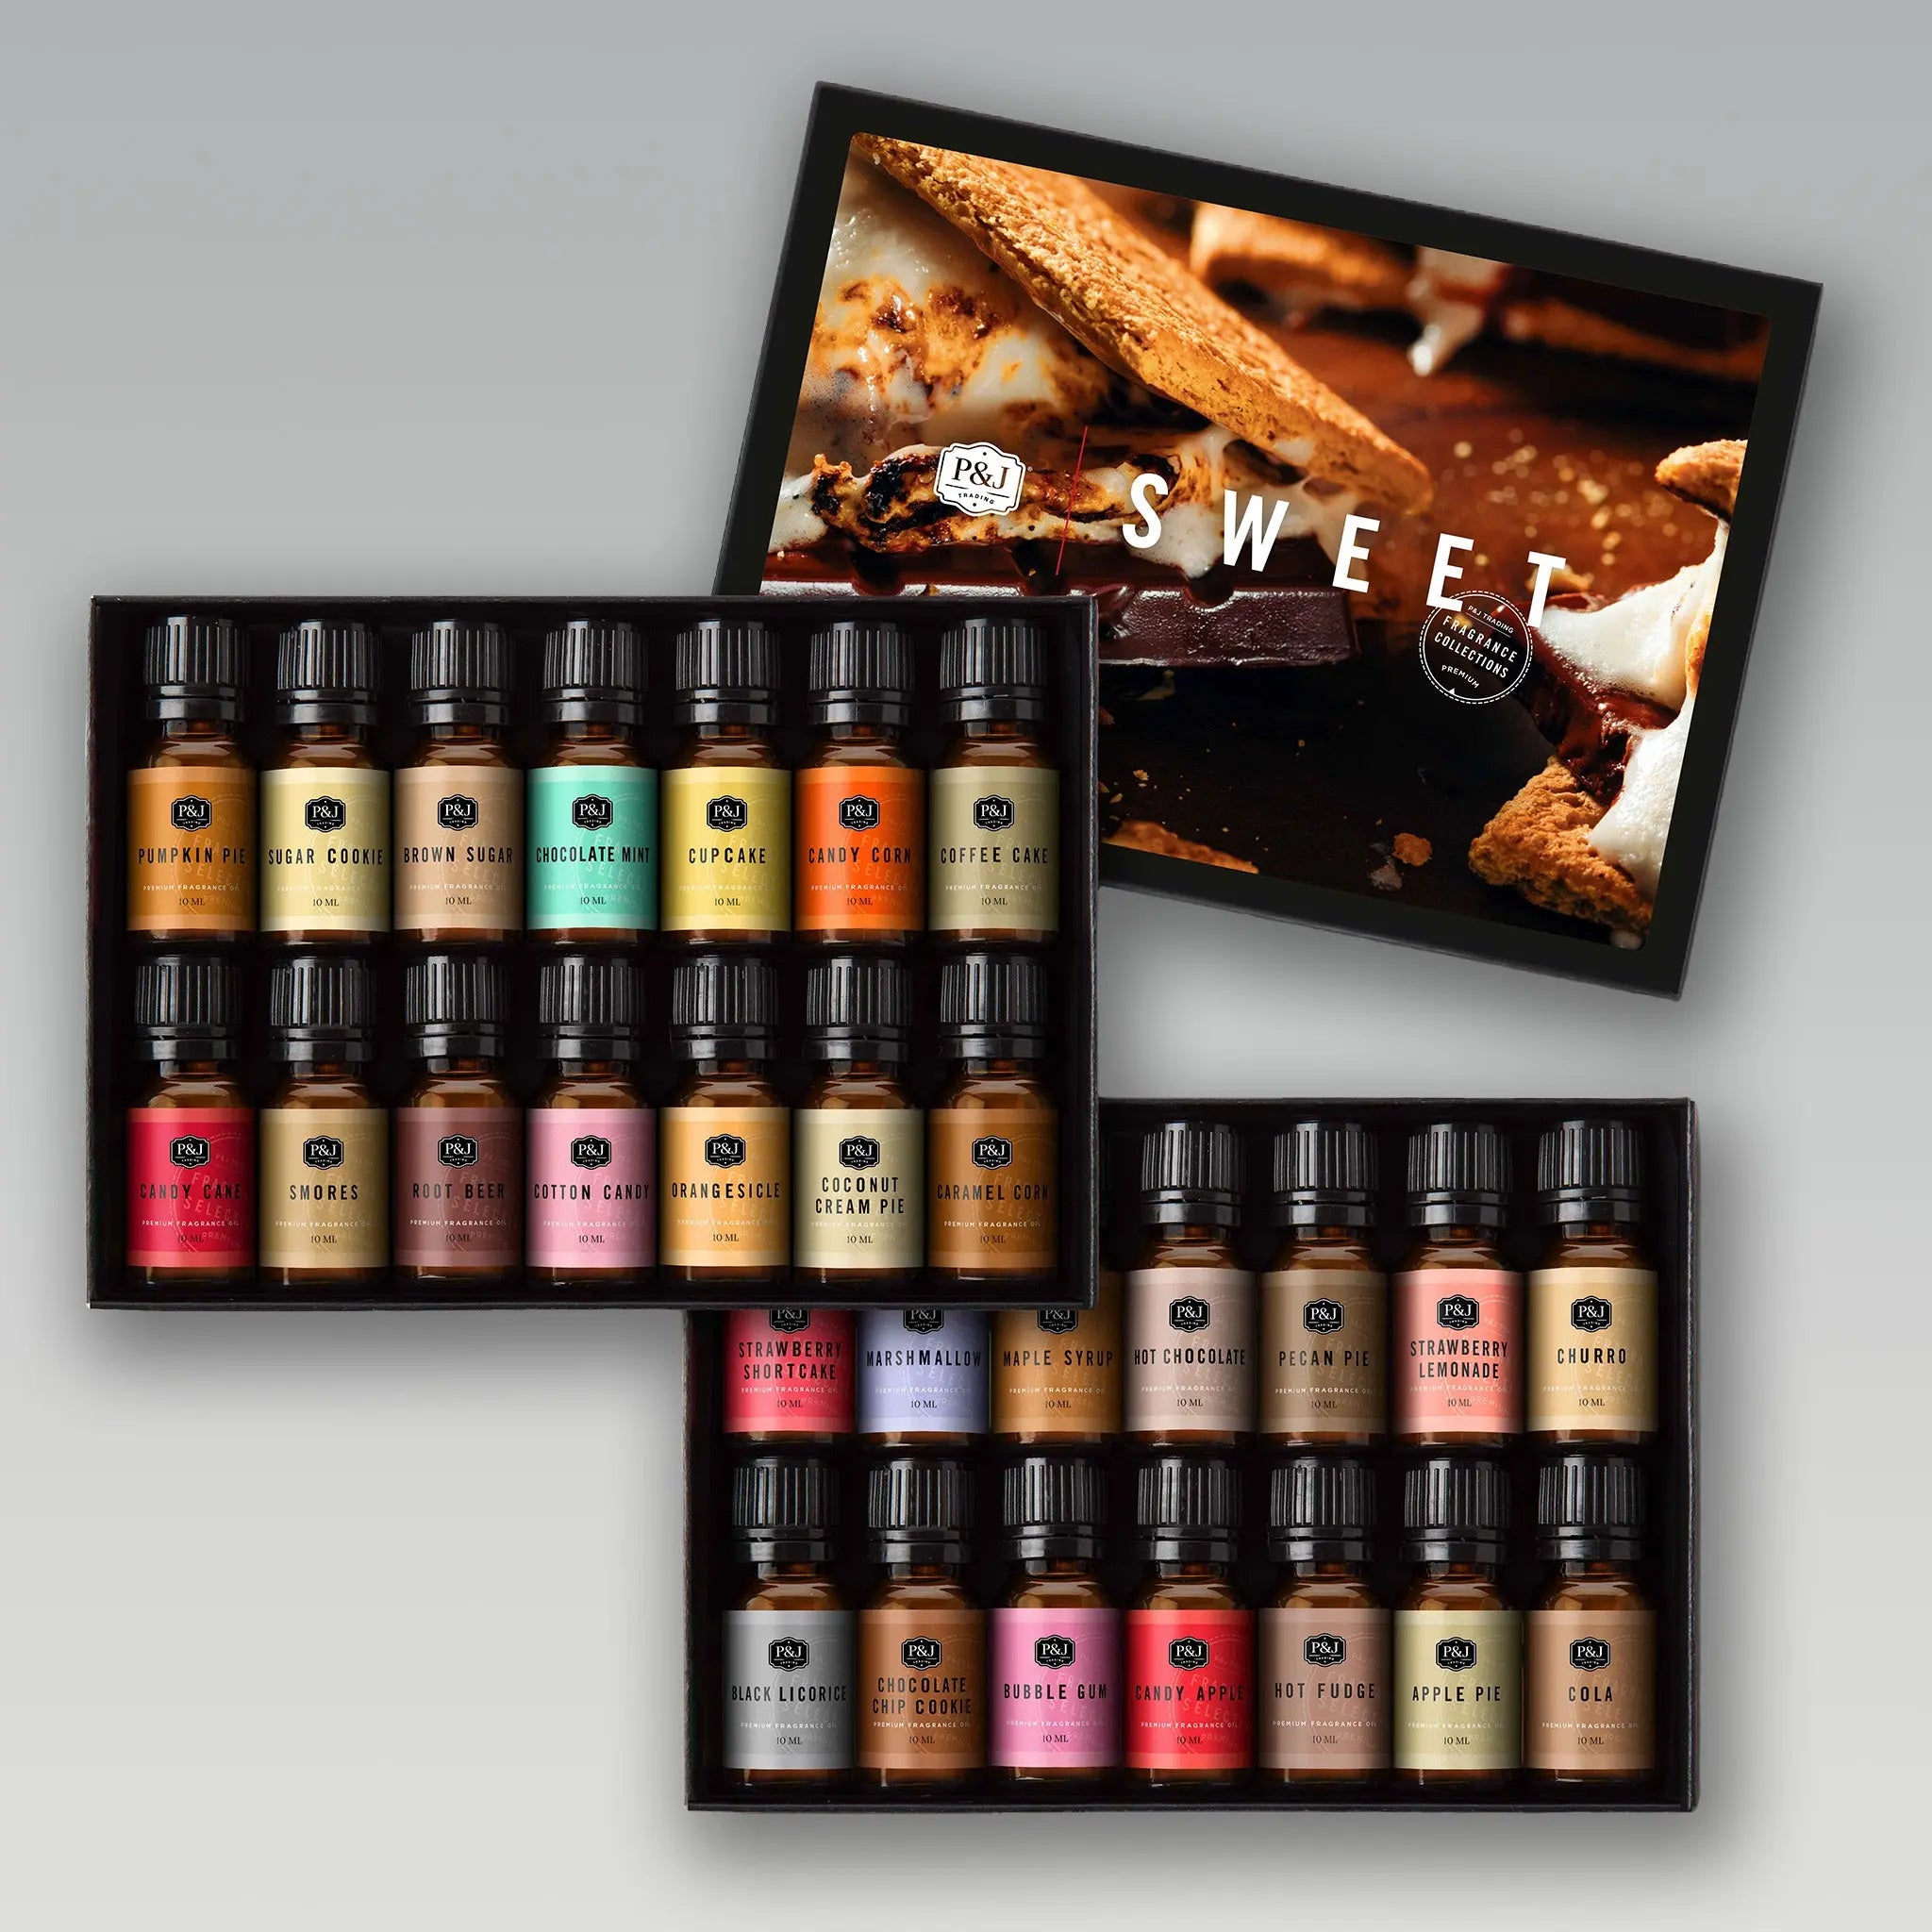 P&J Trading Sweet Set of 14 Fragrance Oils 10ml: Chocolate Mint